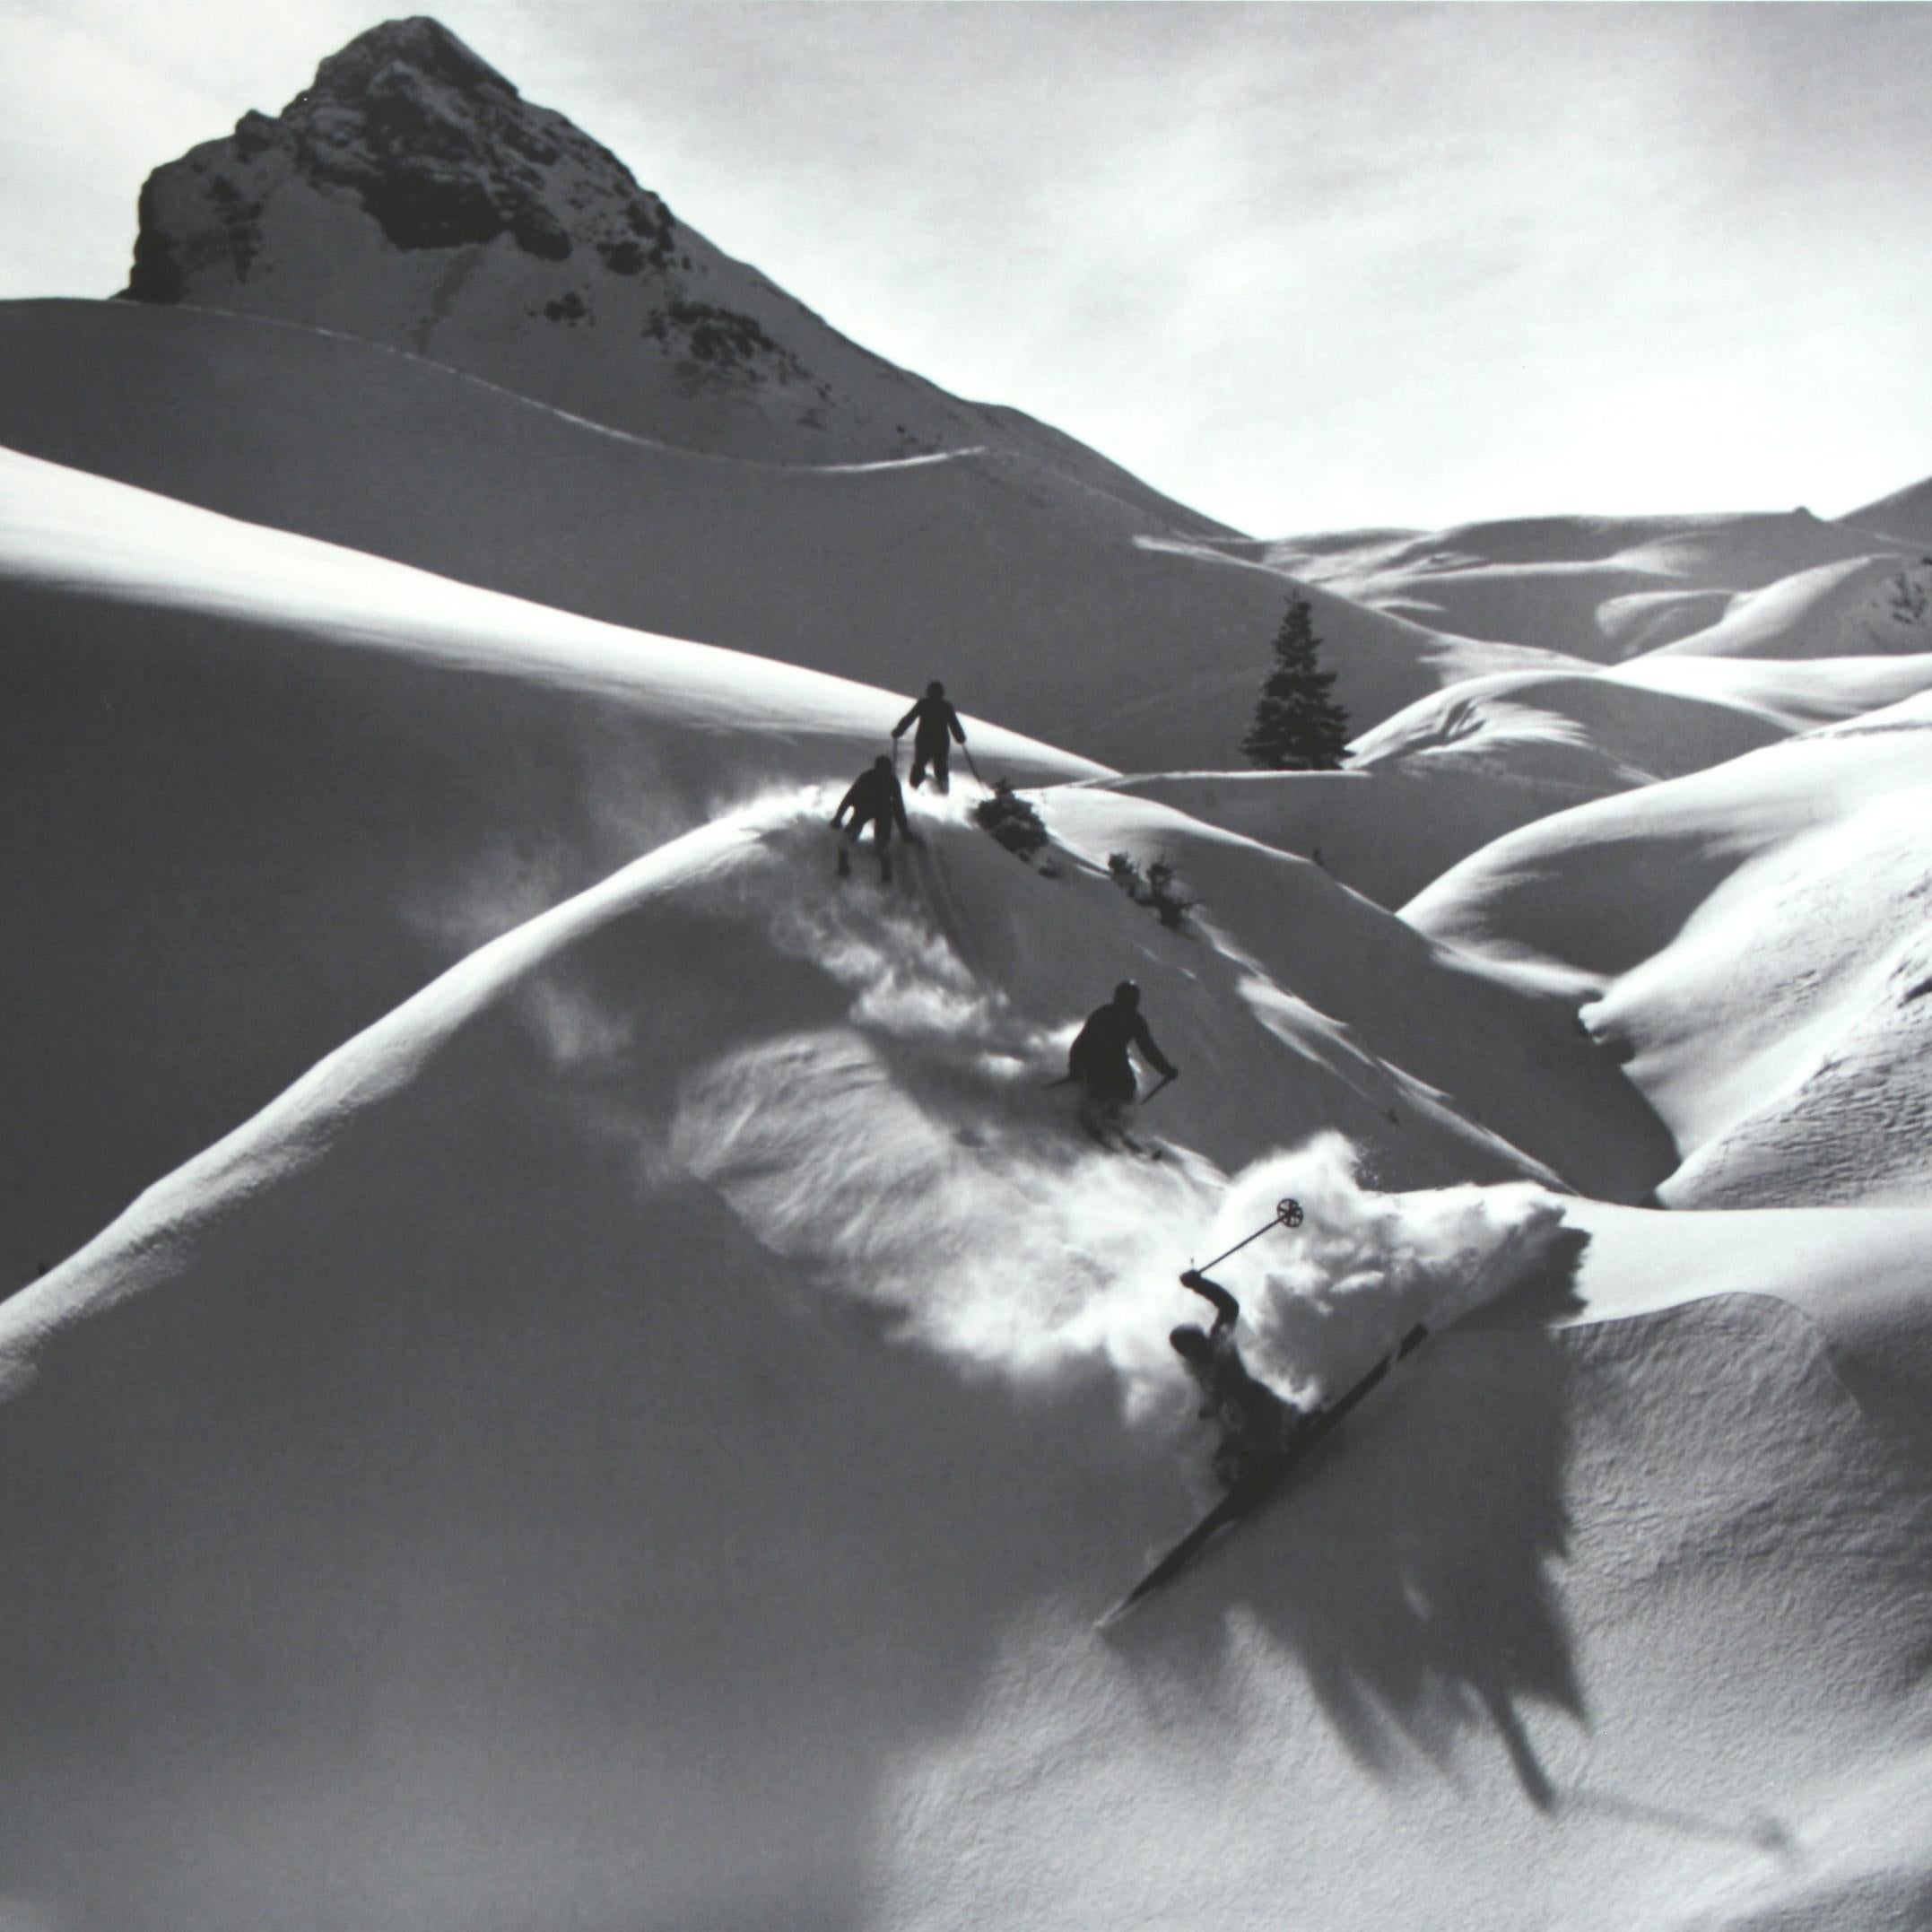 Sporting Art Alpine Ski Photograph, 'VIRGIN POWDER', Taken from Original 1930s Photograph For Sale